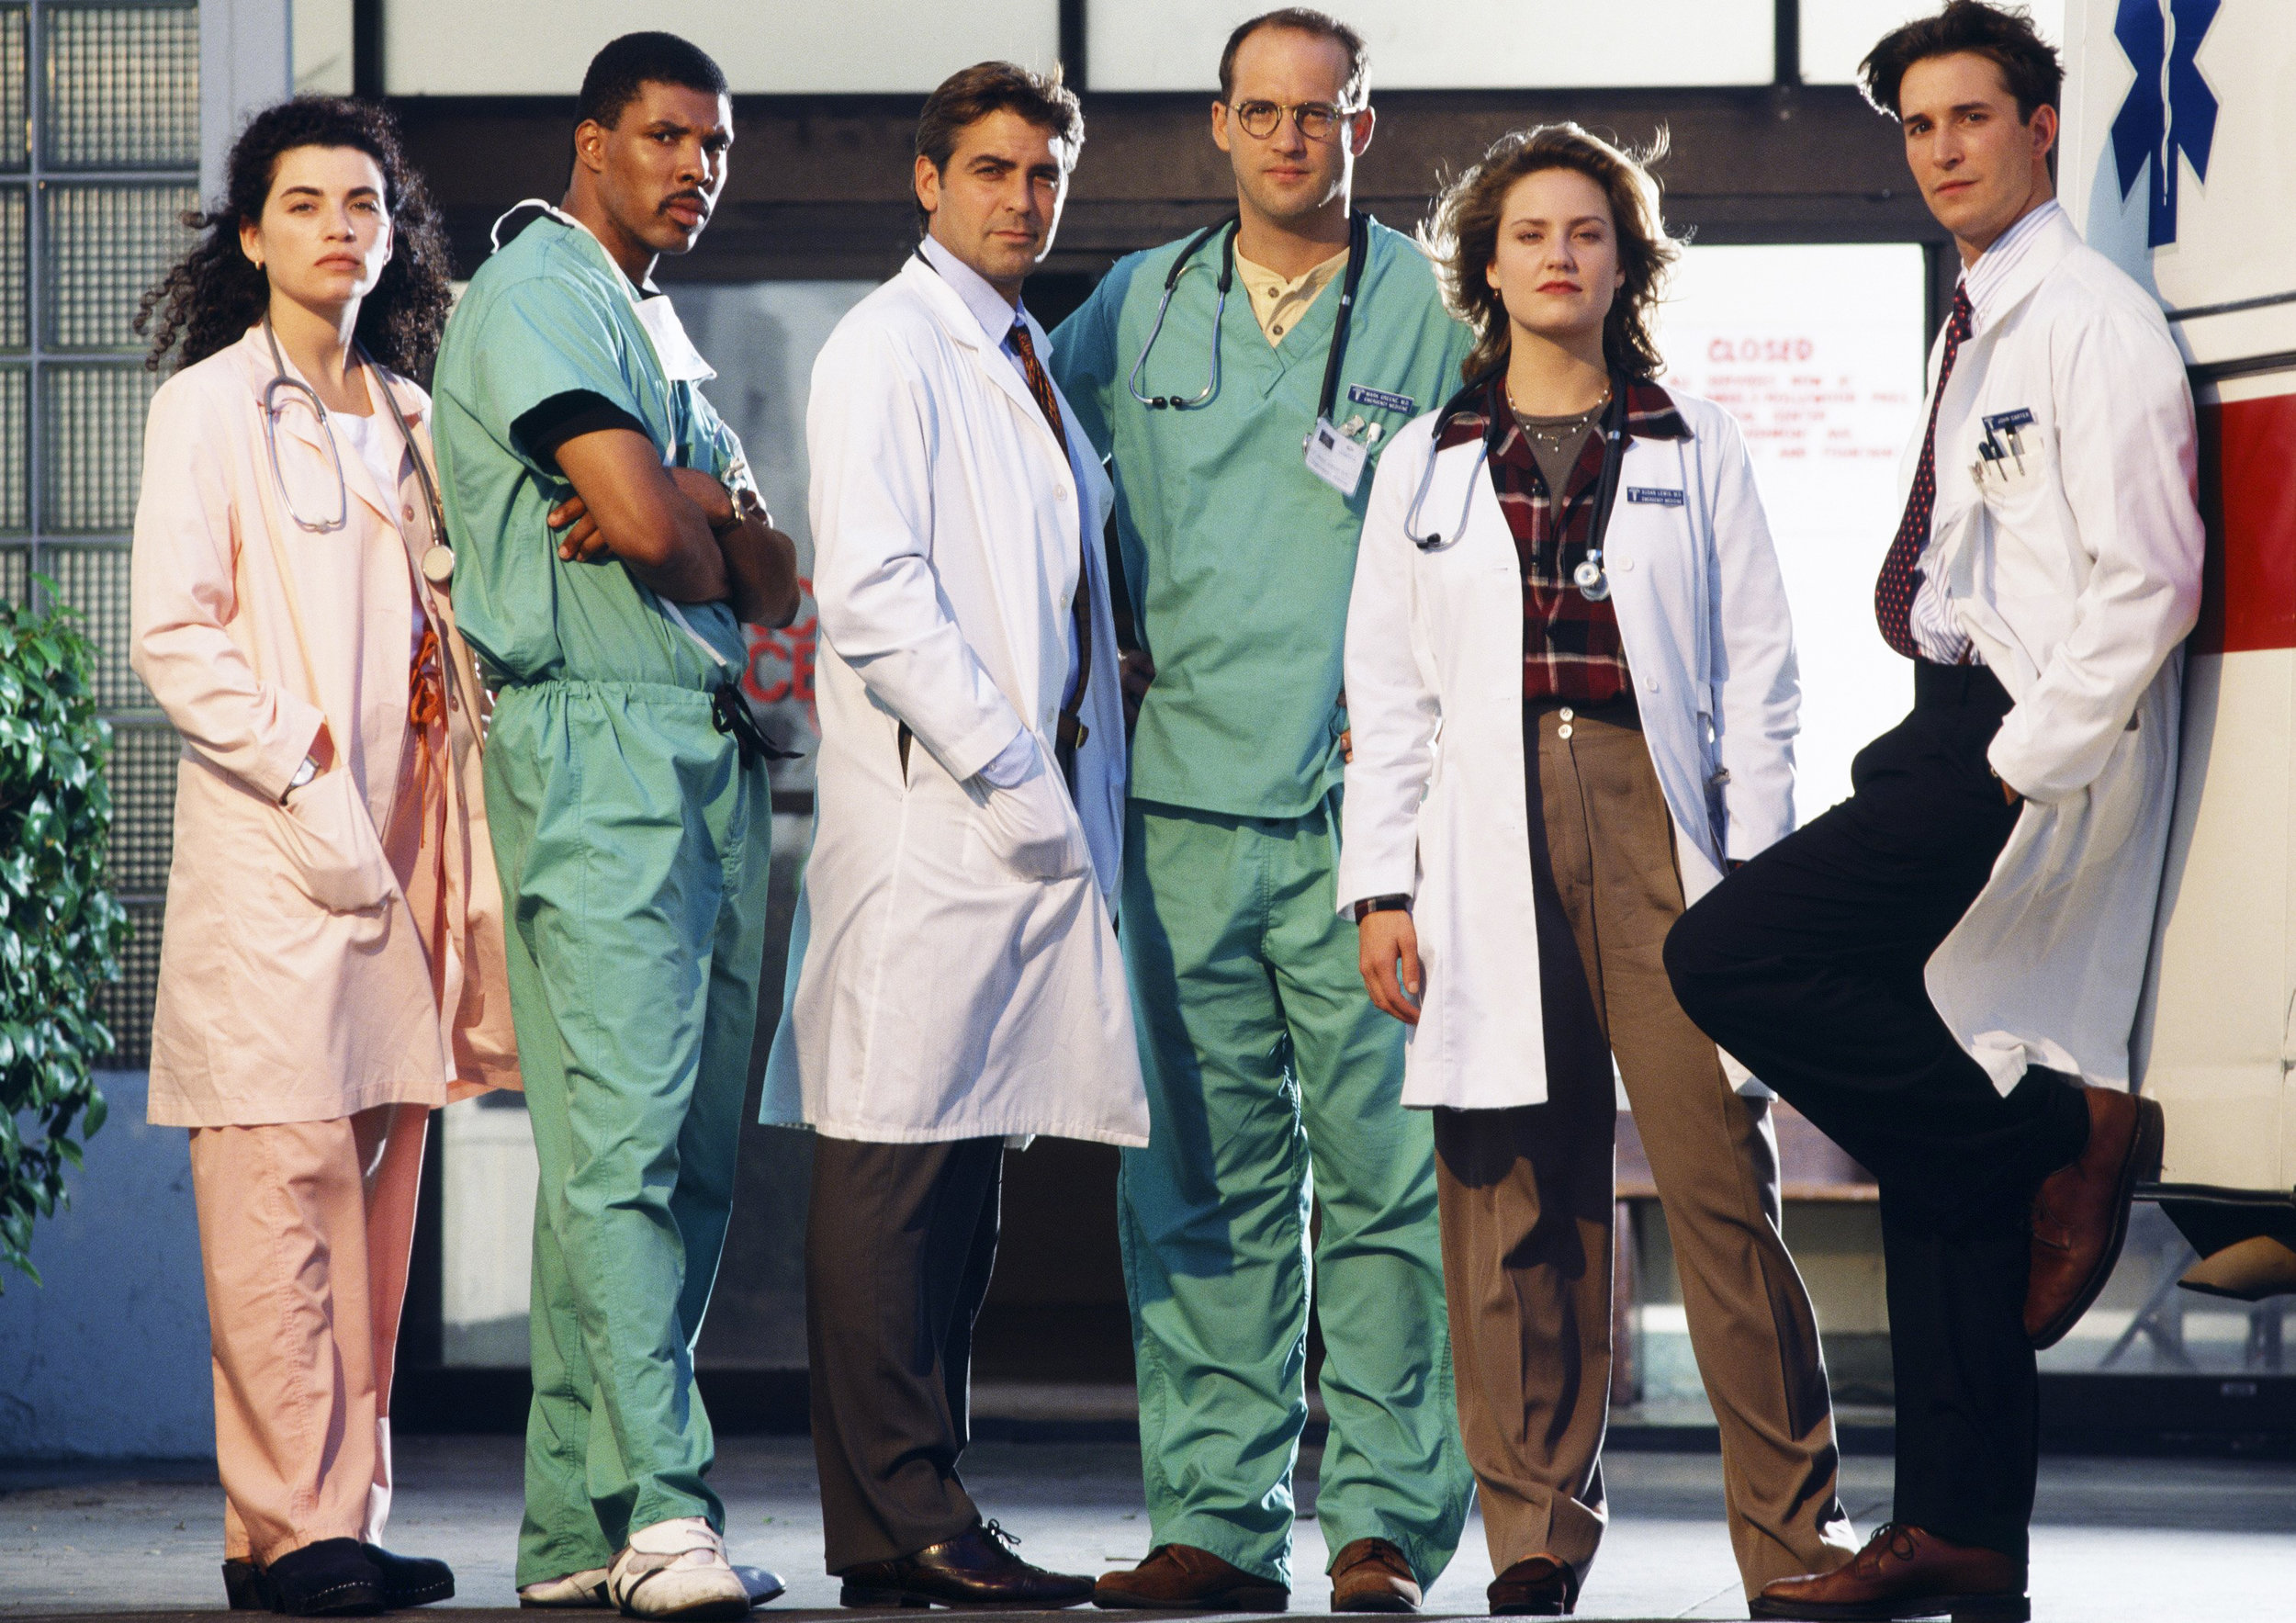   The cast of ER  